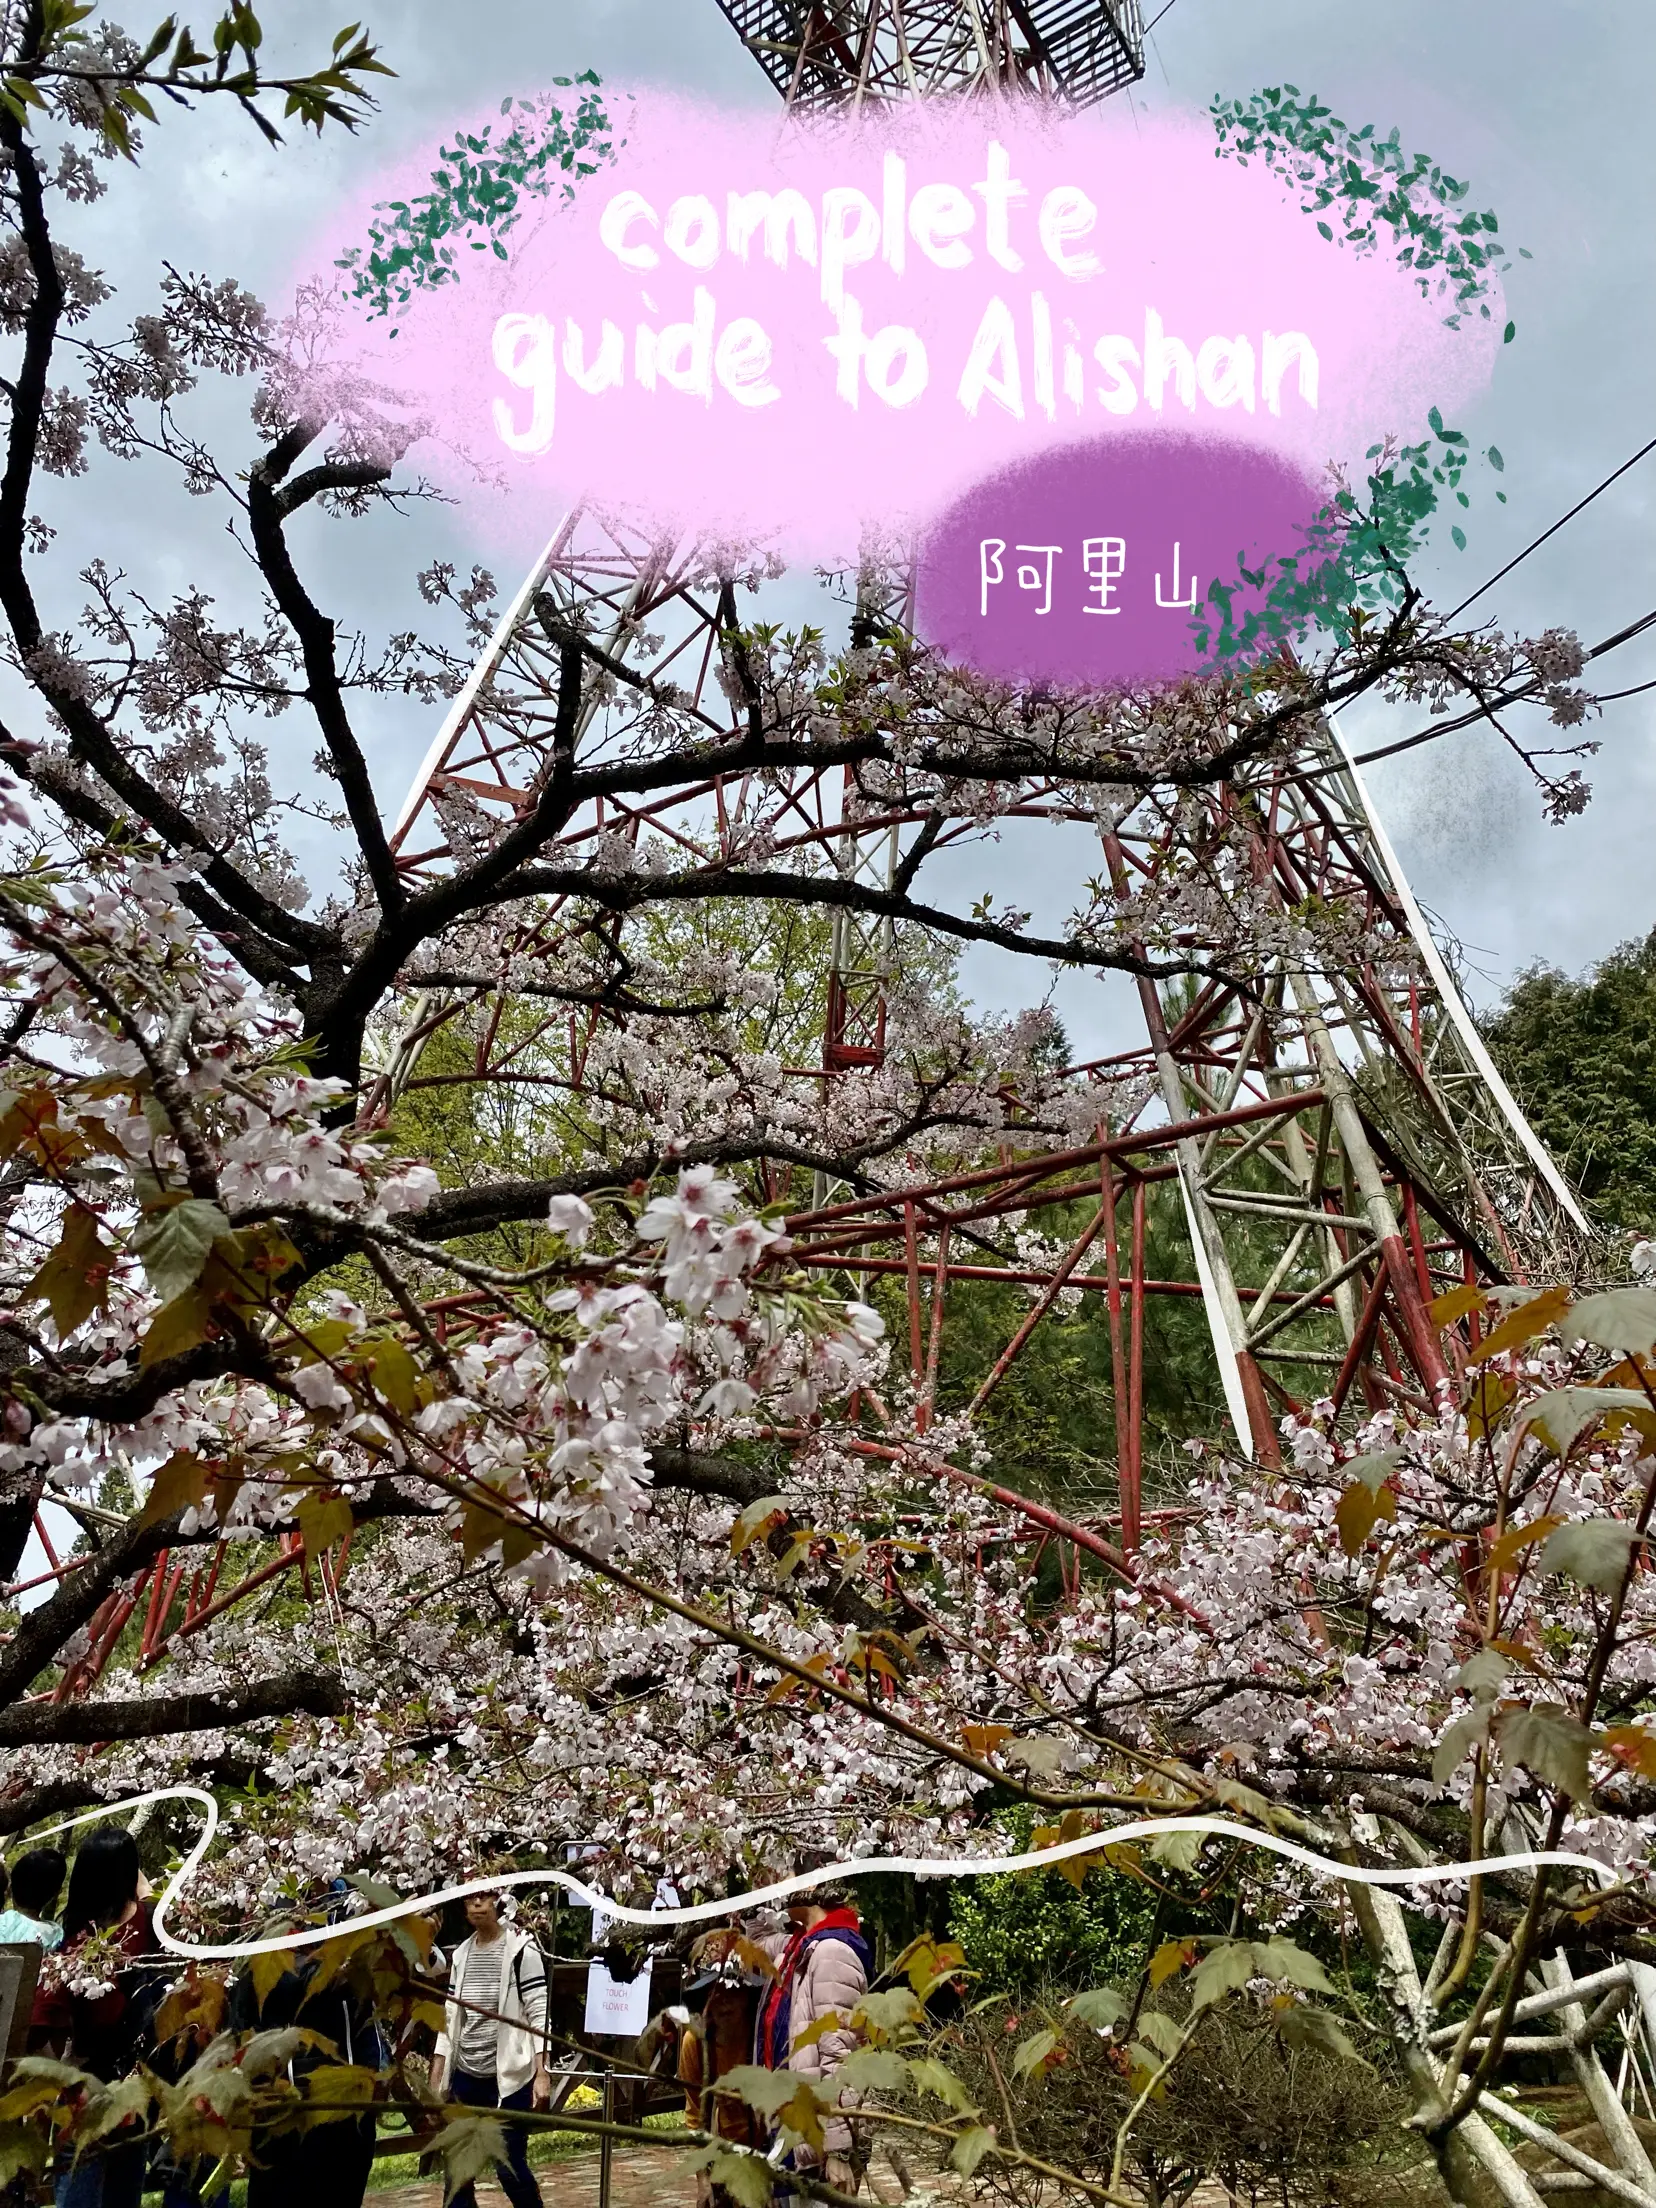 About Alishan - Alishan at the Alley - Cebu Philippines